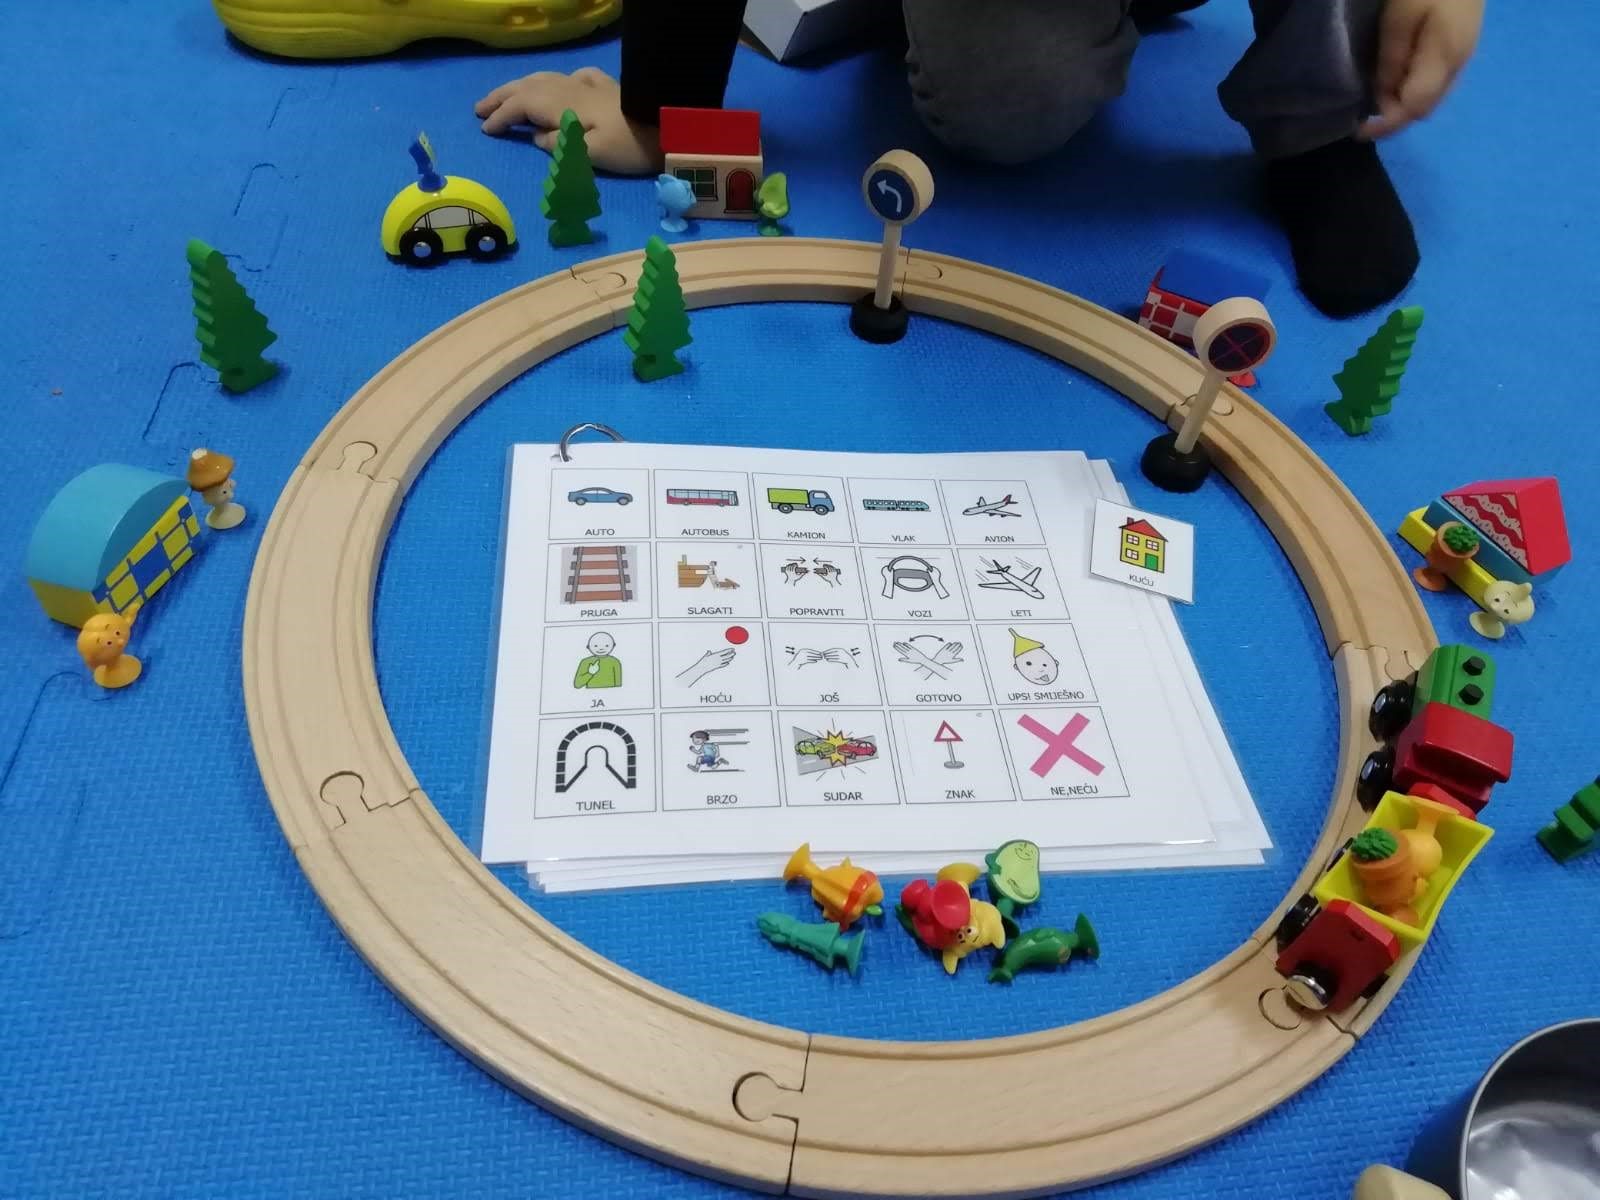  Slika upotrebe komunikacijske ploče tijekom aktivnosti s vlakom